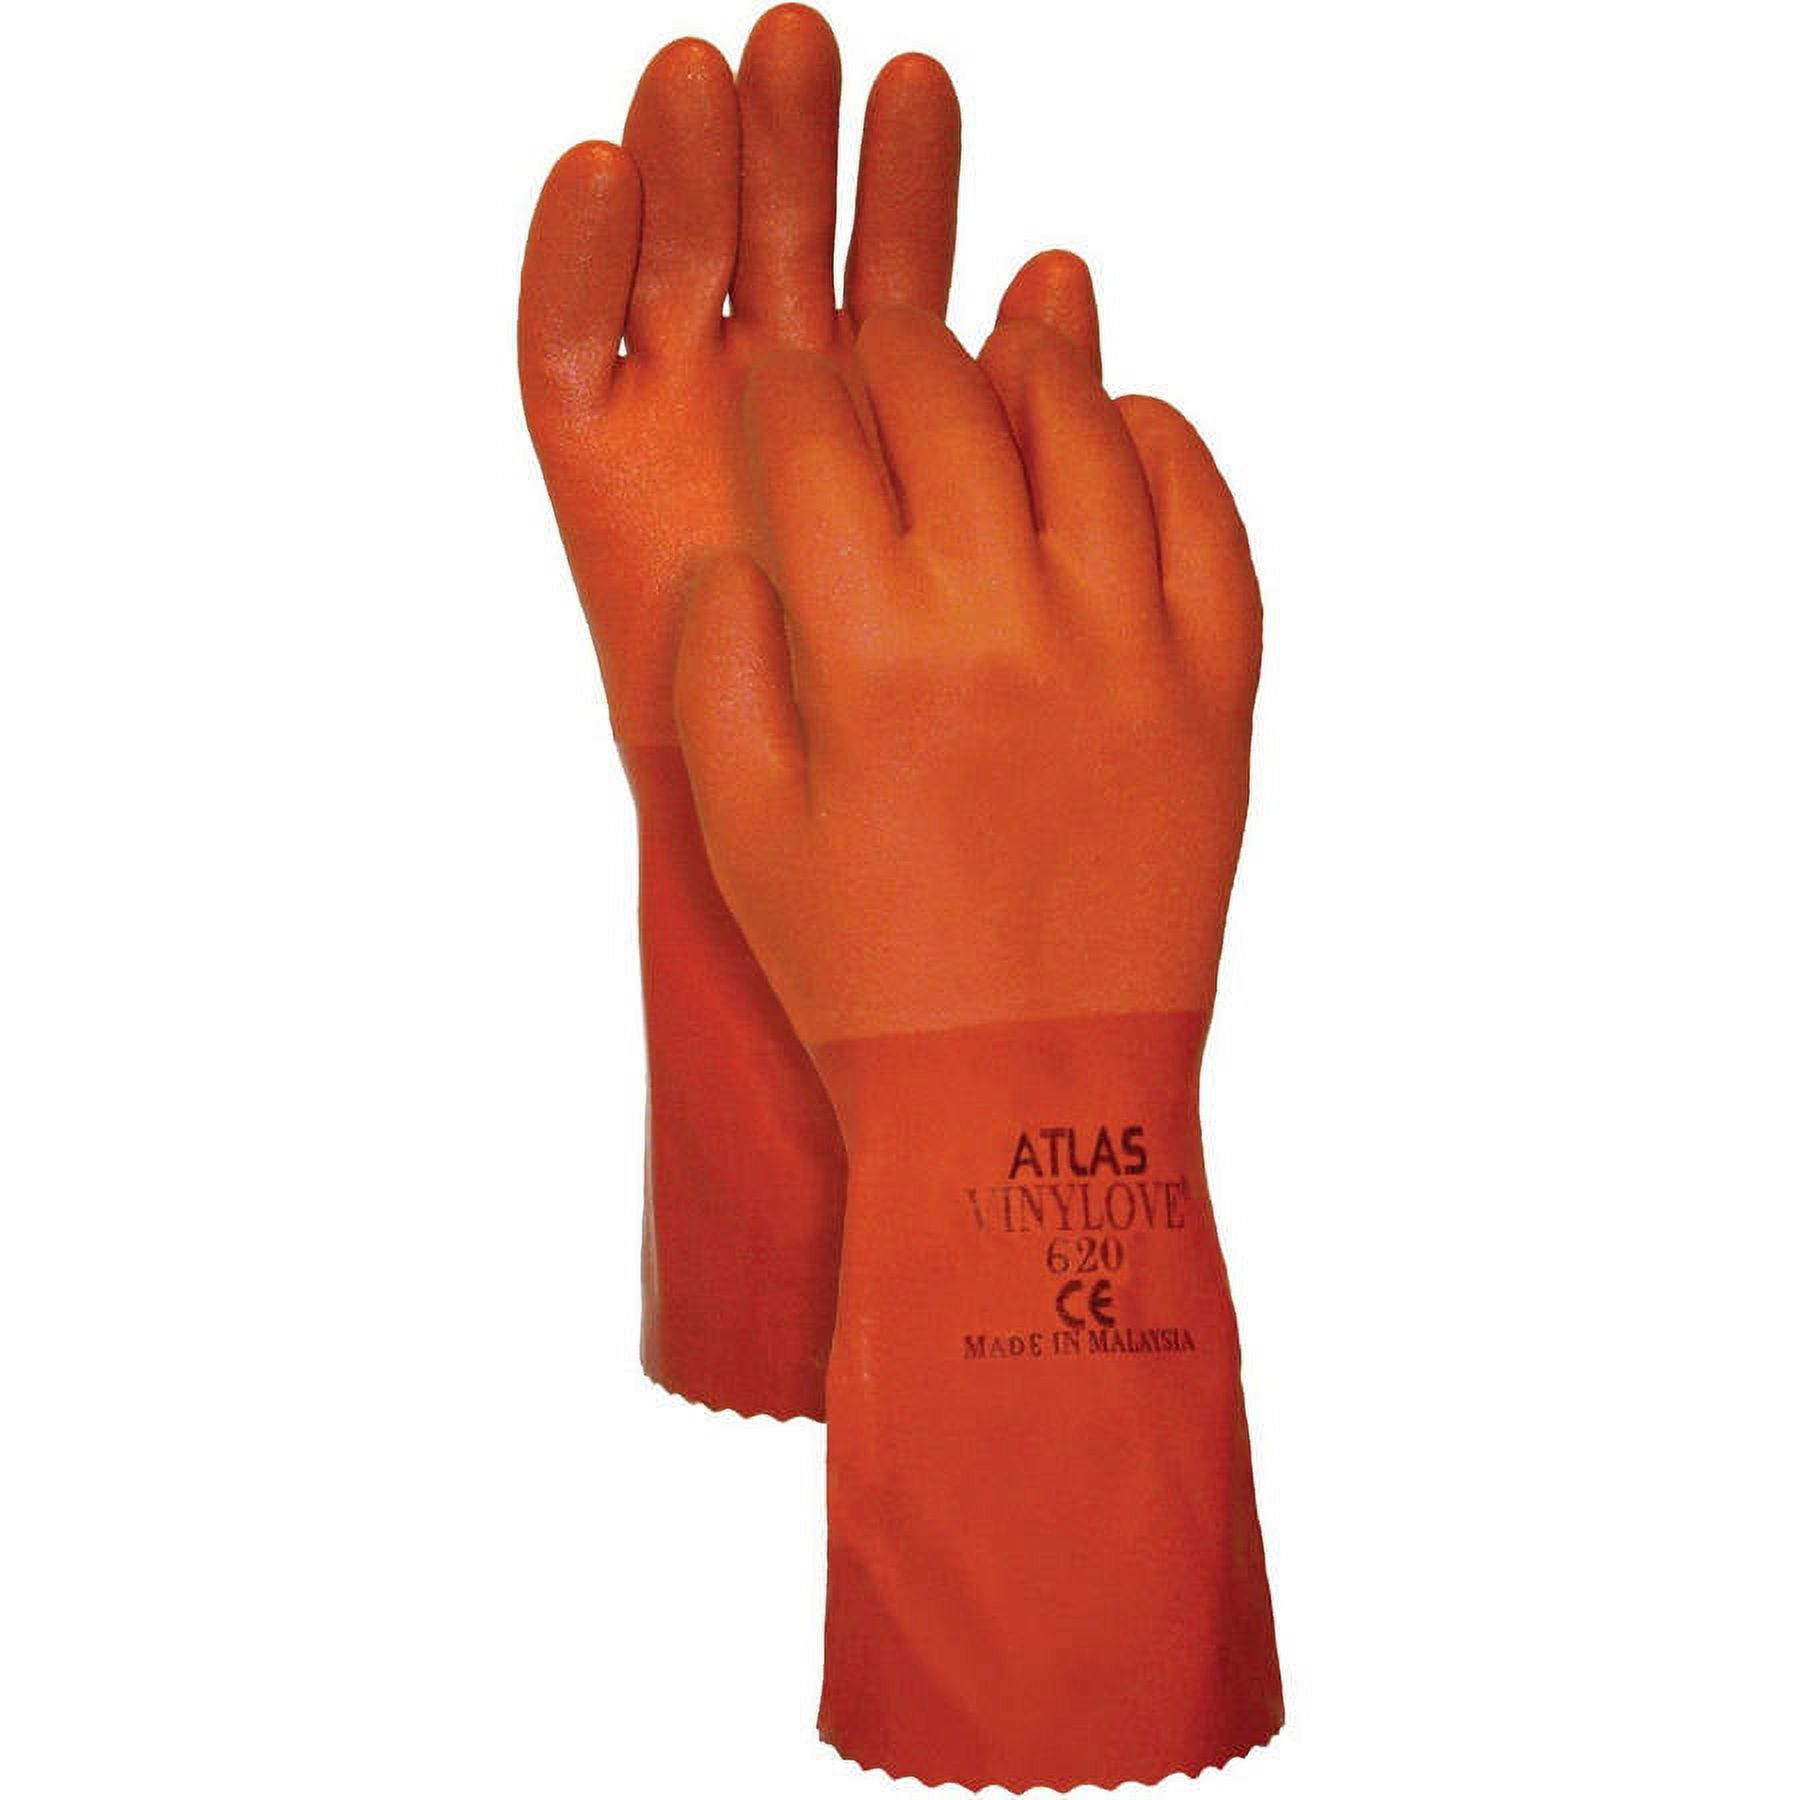 Atlas Vinylove PVC Gloves - image 1 of 1